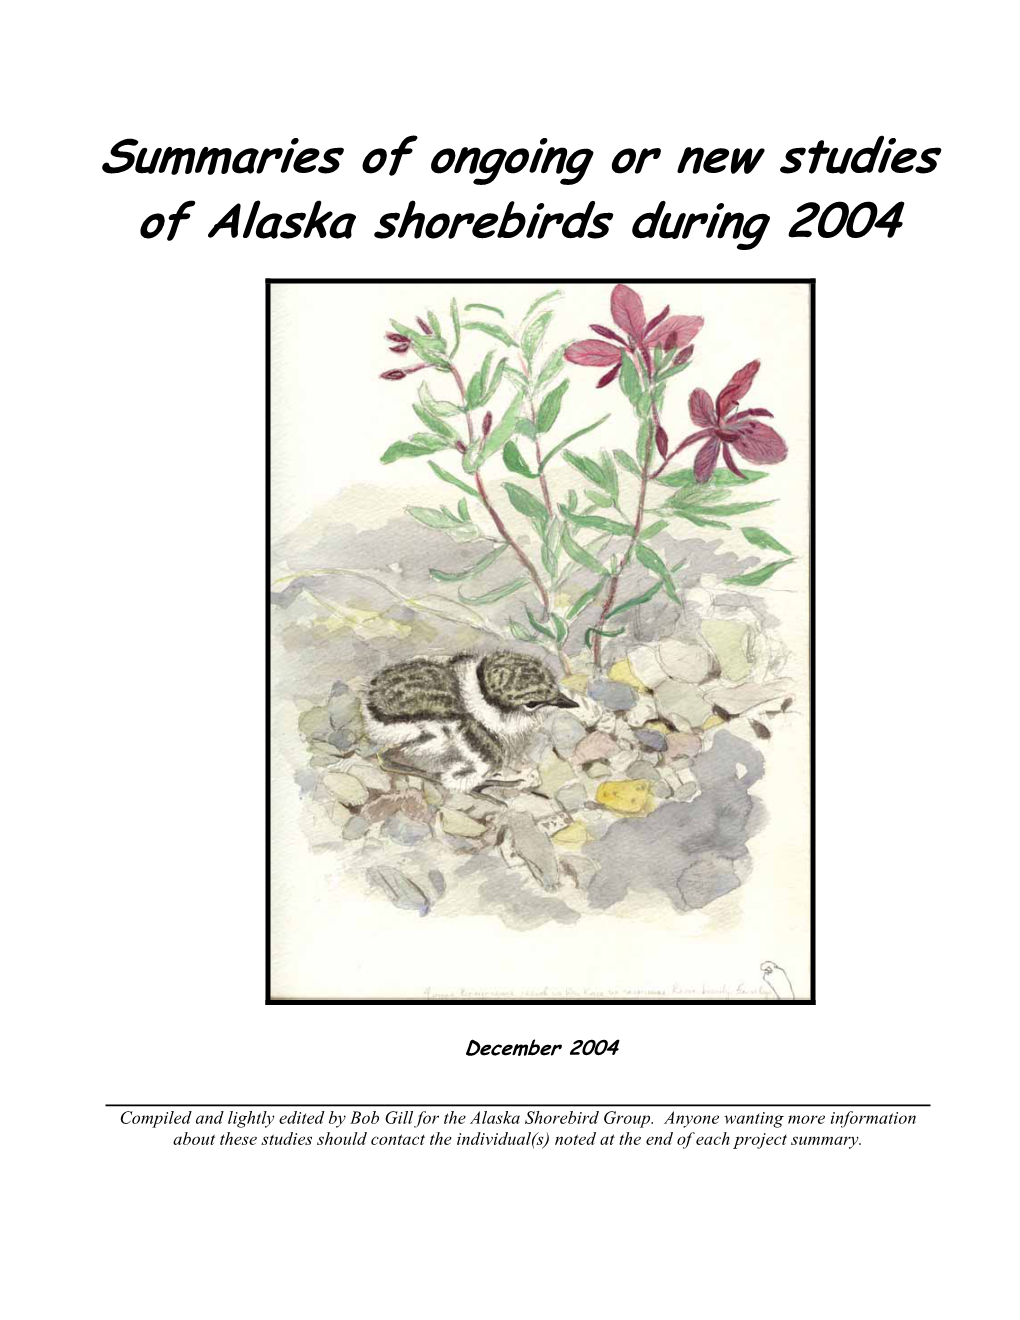 Summaries of Ongoing Or New Studies of Alaska Shorebirds During 2004